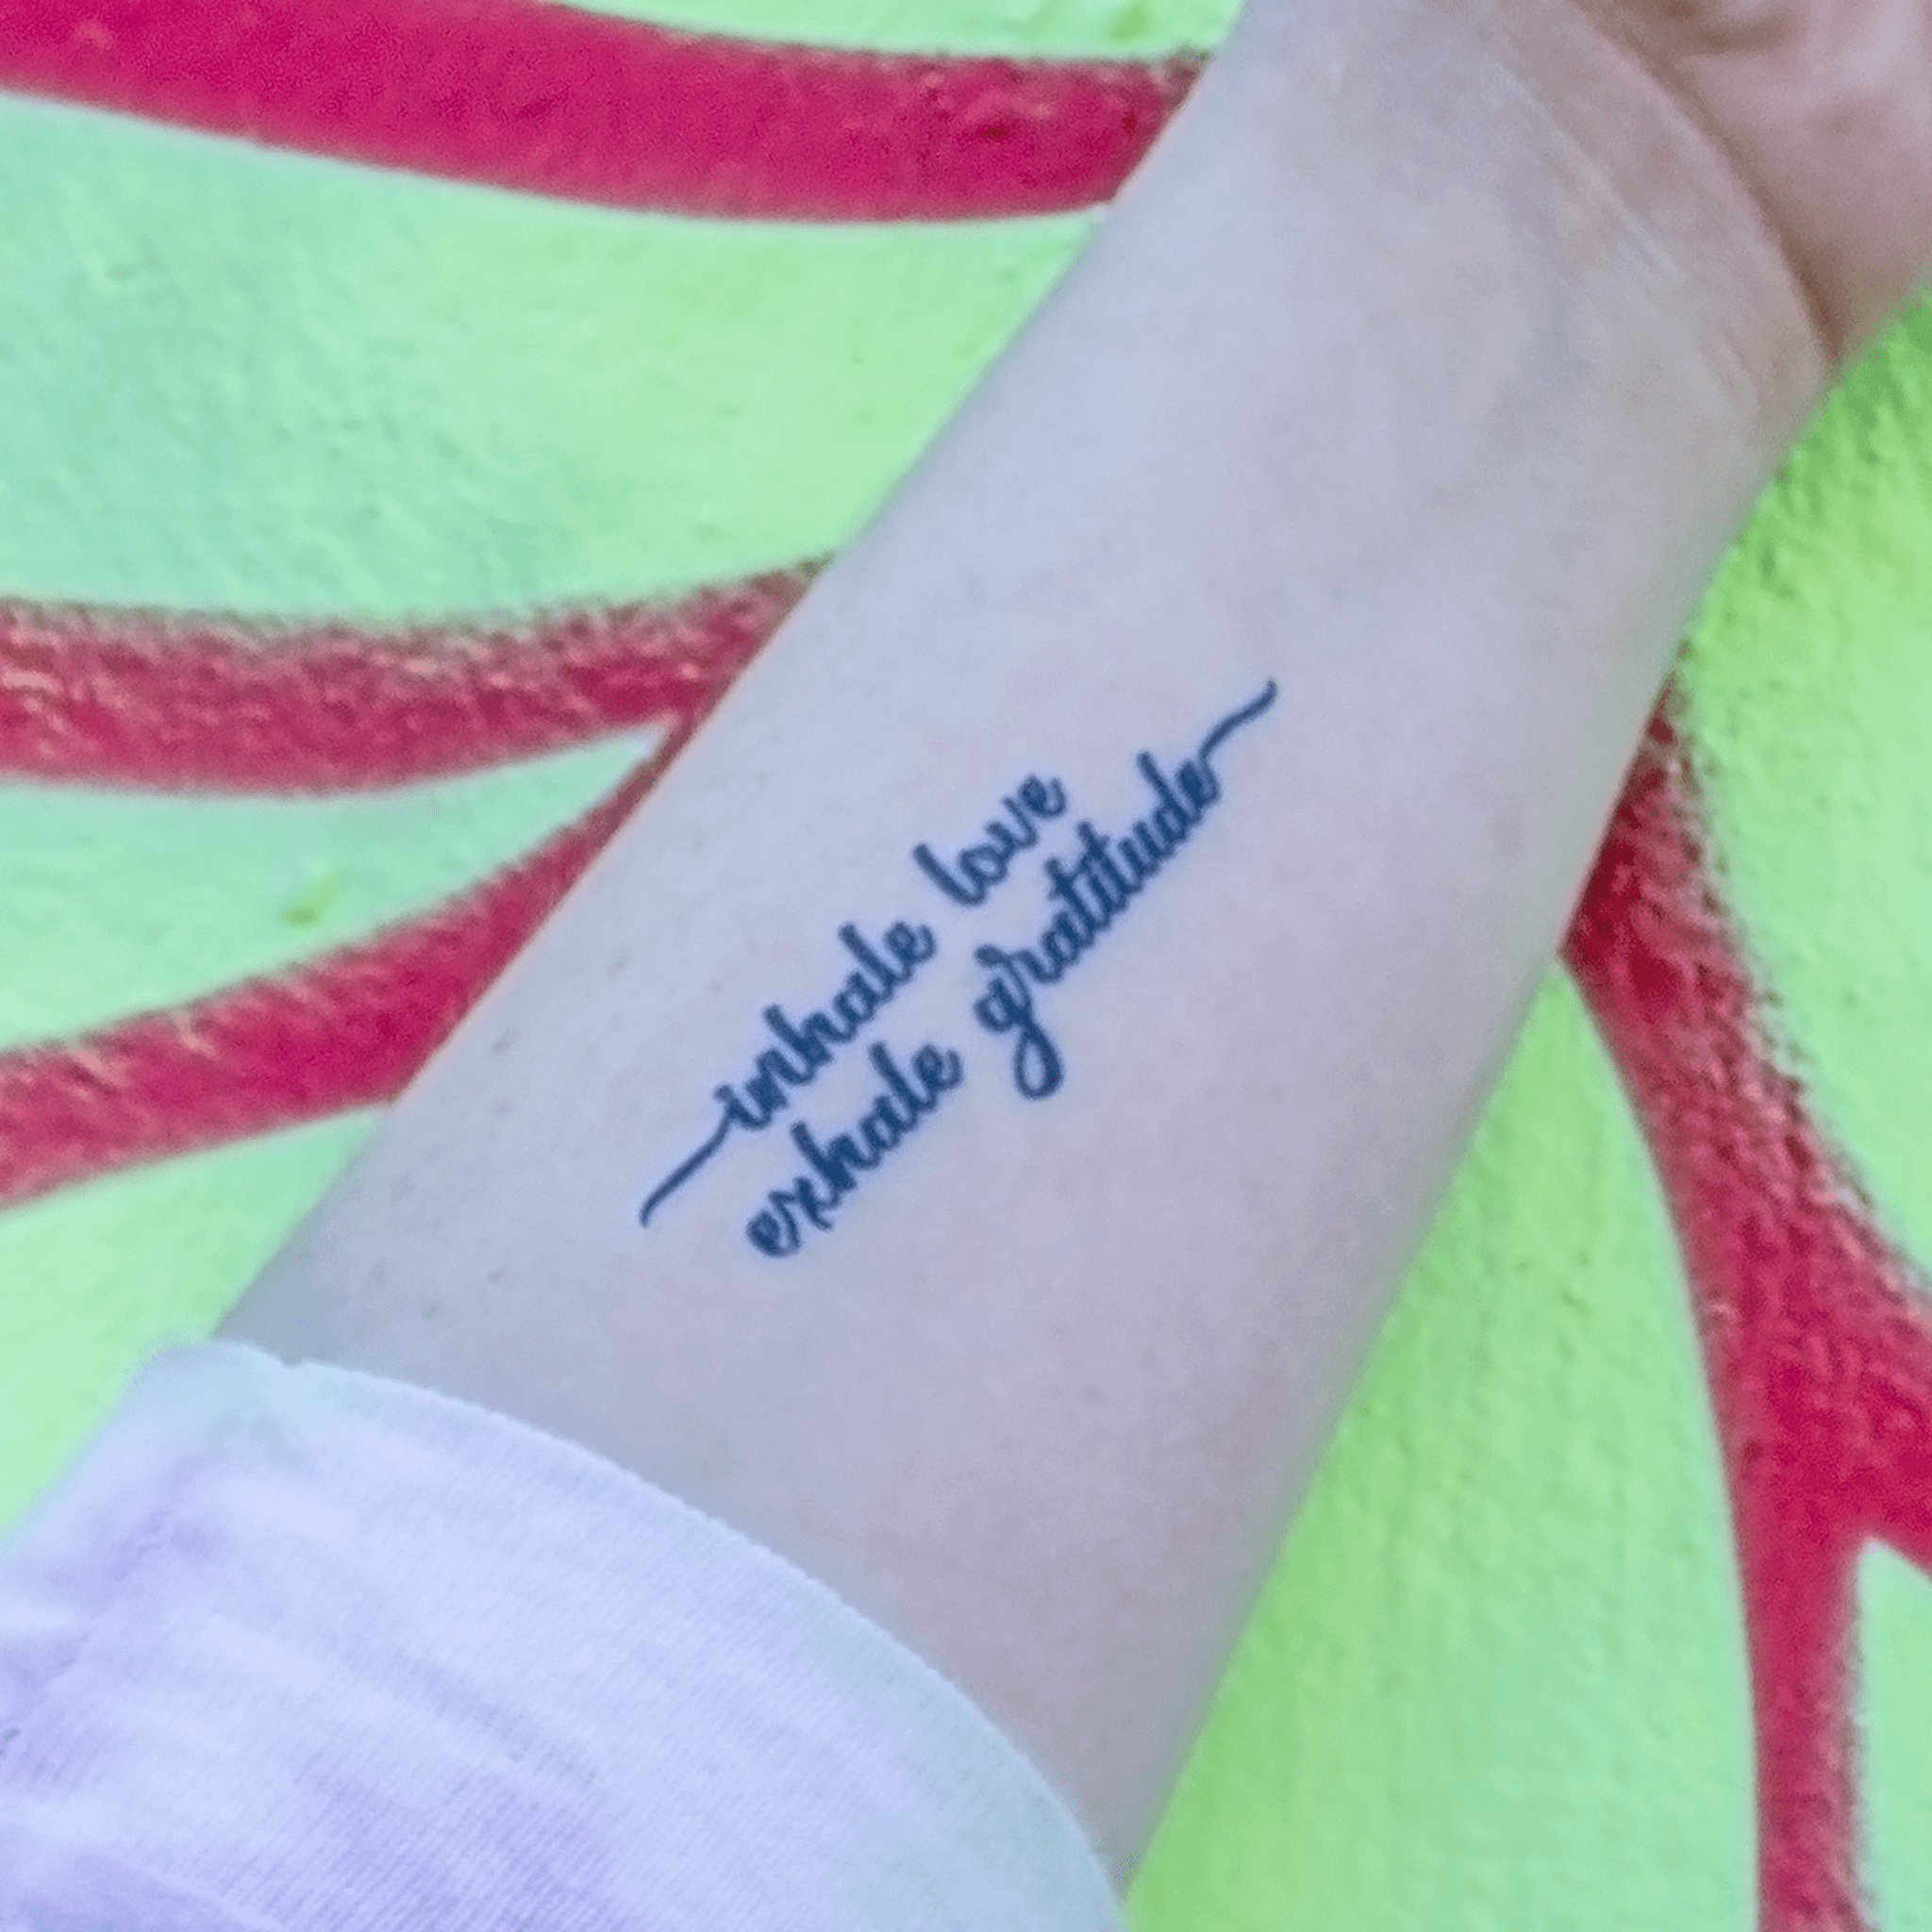 Gratitude” tattoo on the wrist.